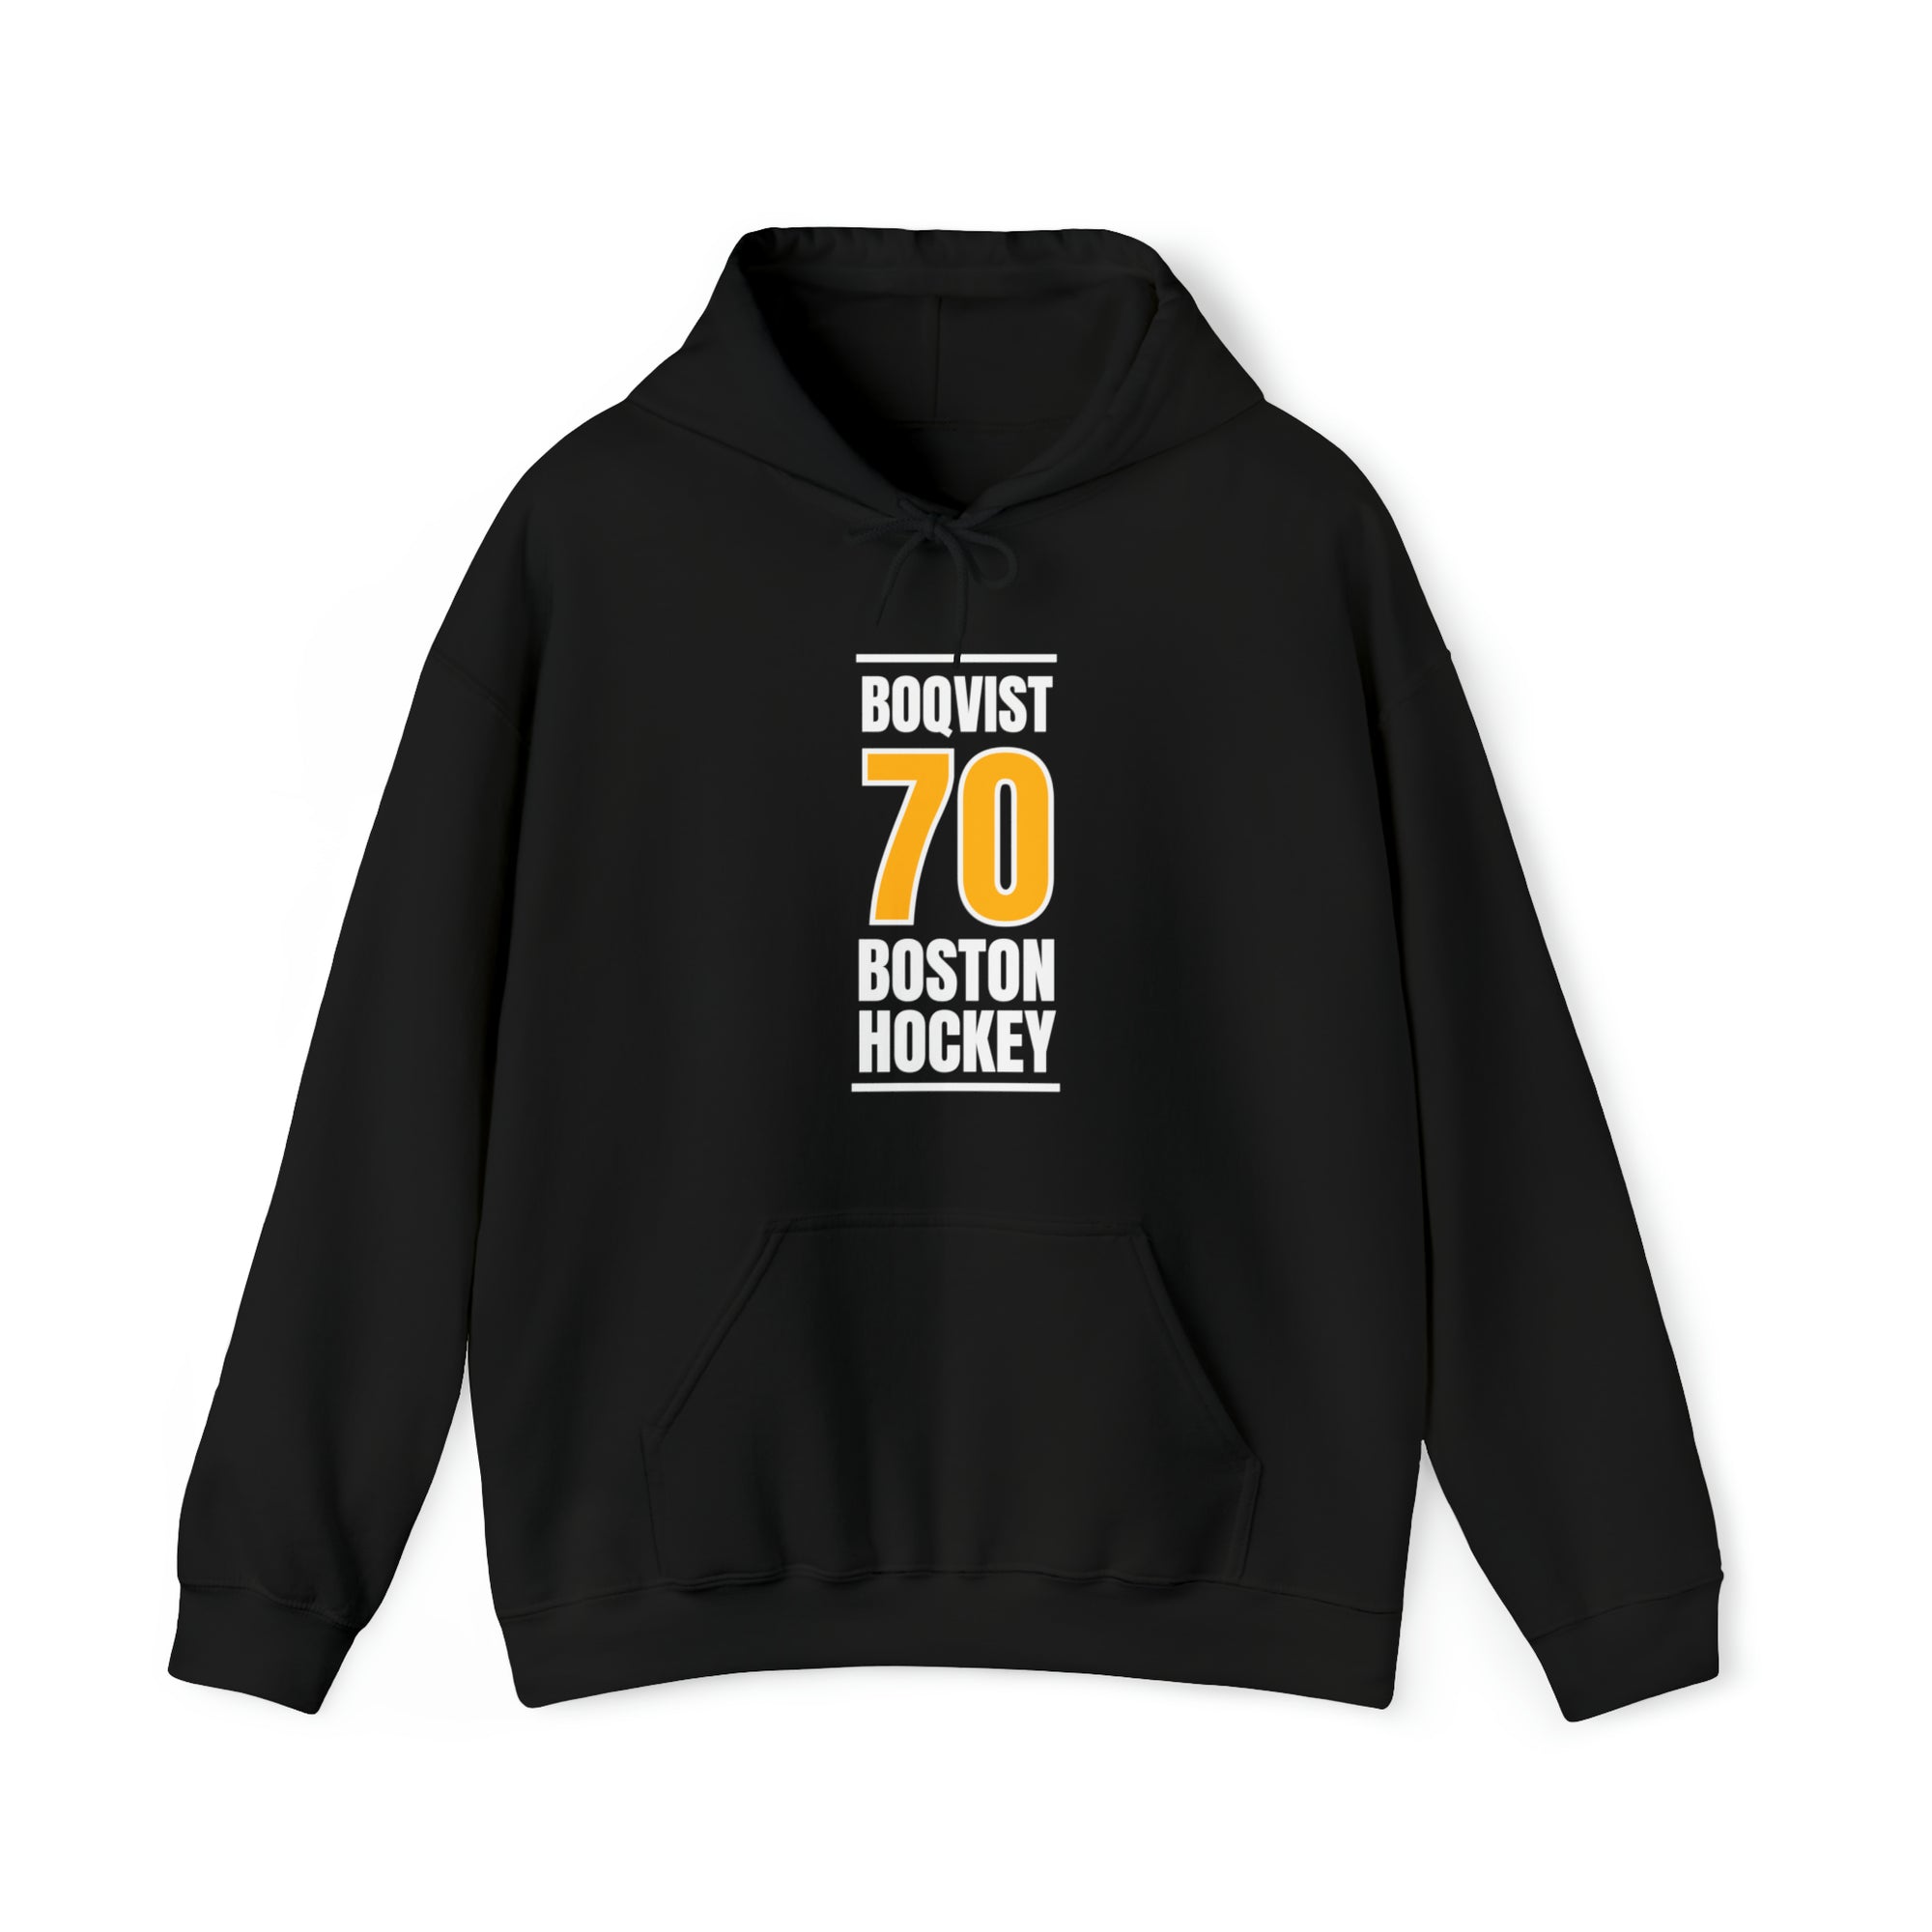 Boqvist 70 Boston Hockey Gold Vertical Design Unisex Hooded Sweatshirt